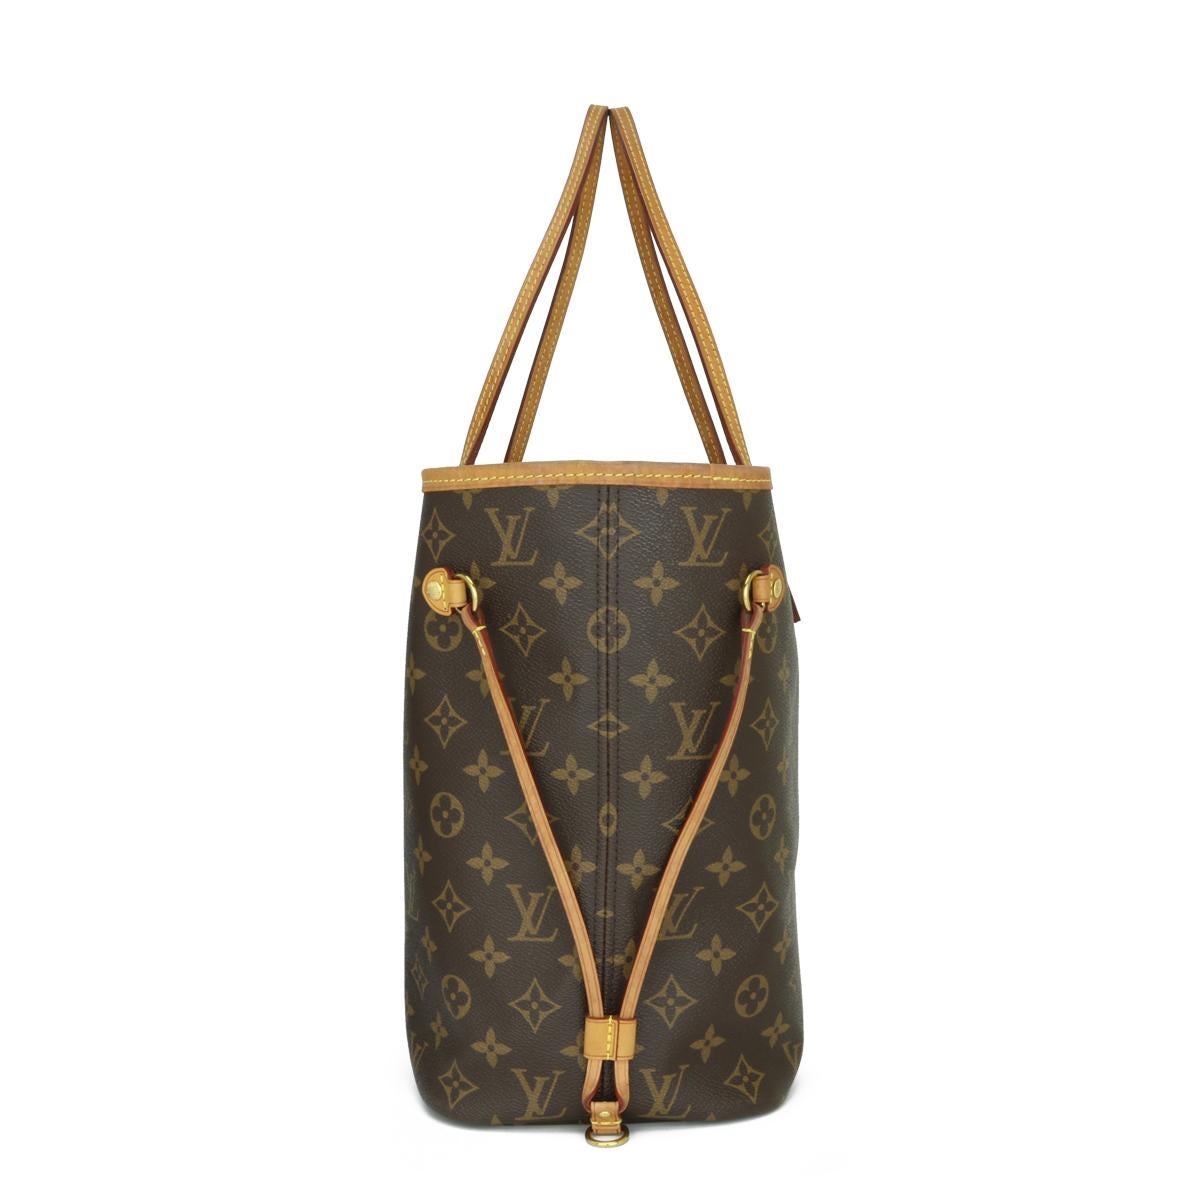 Women's or Men's Louis Vuitton Neverfull MM Bag in Monogram with Pivoine Interior 2019